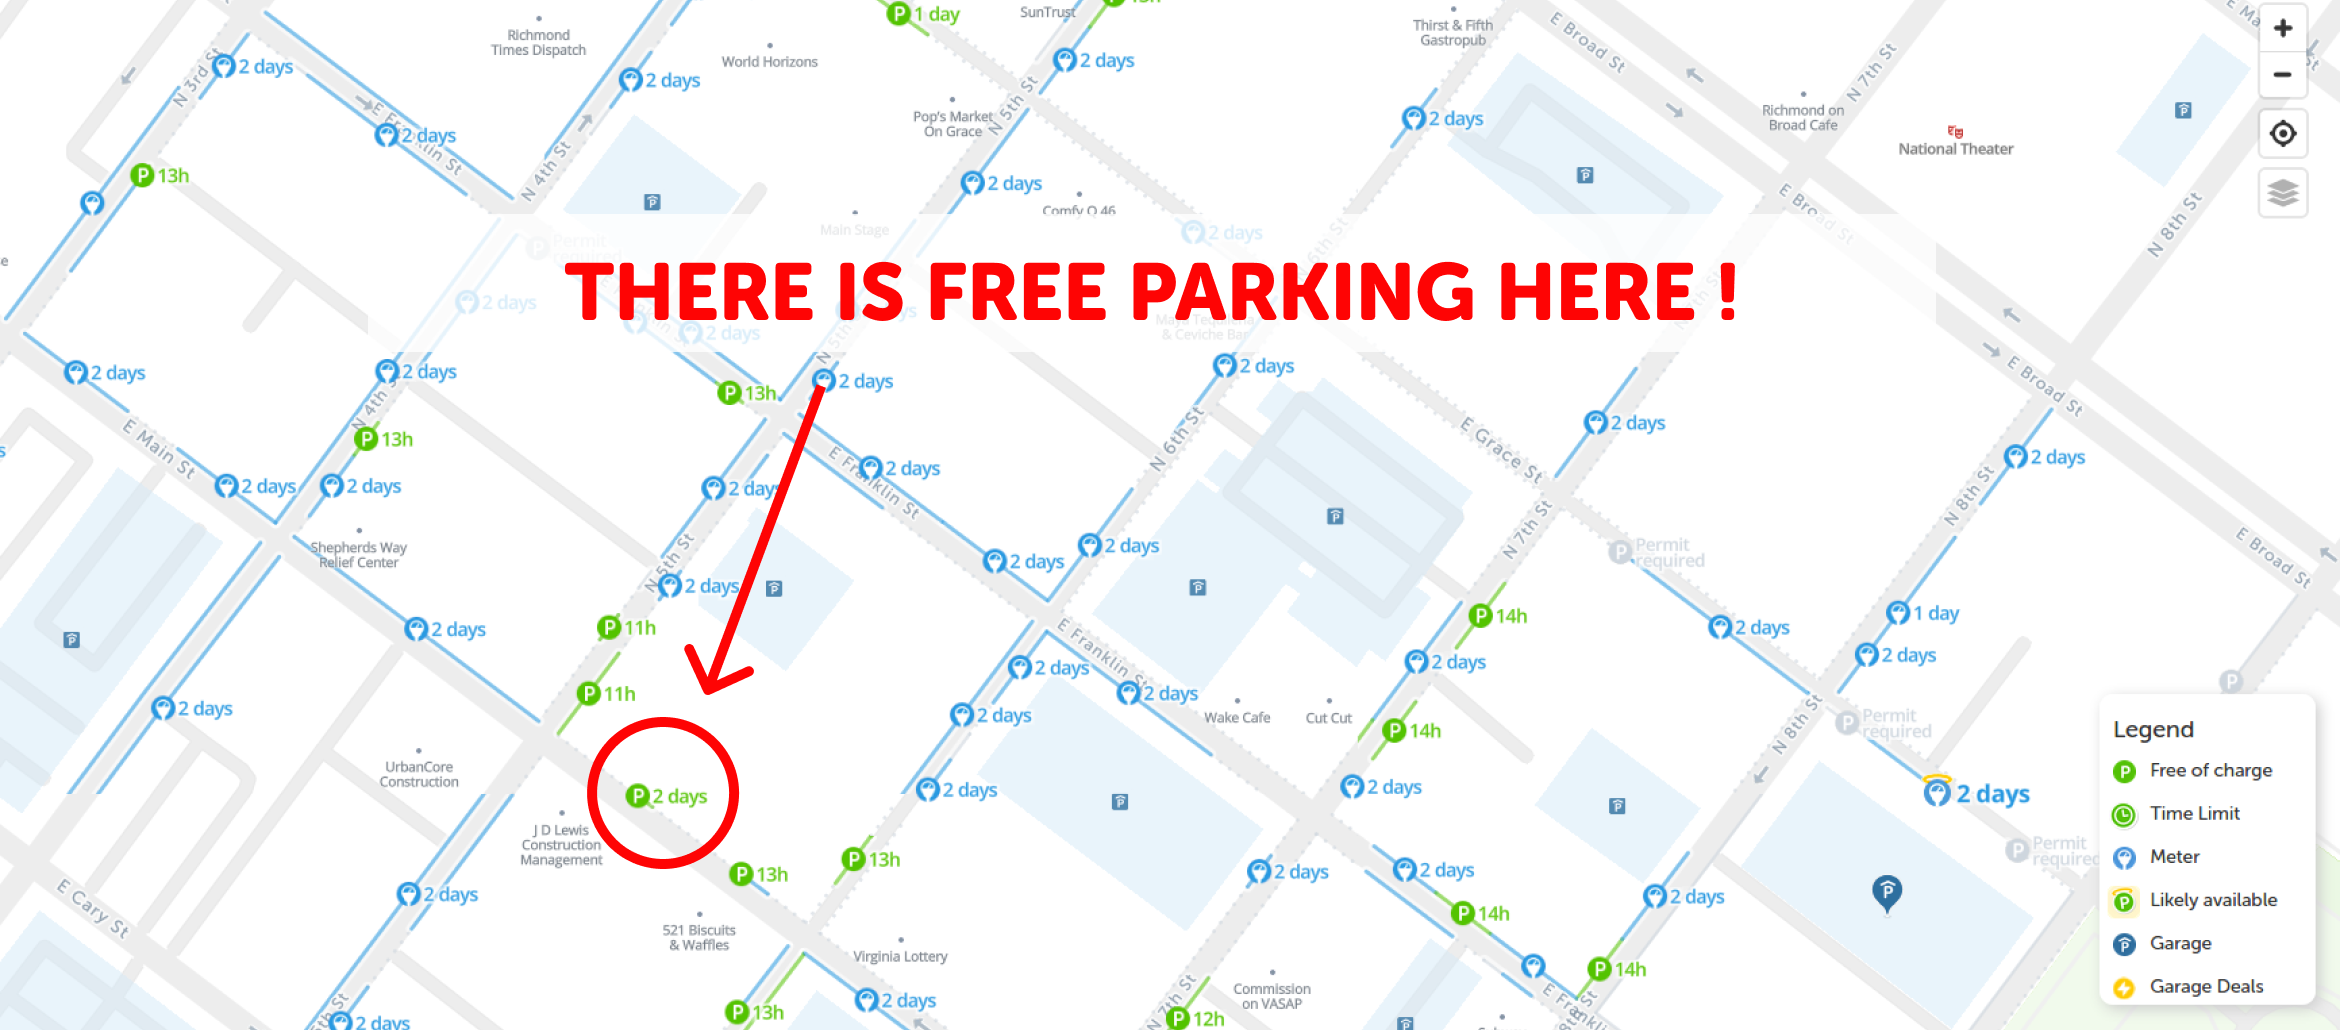 map of free parking in Richmond - SpotAngels